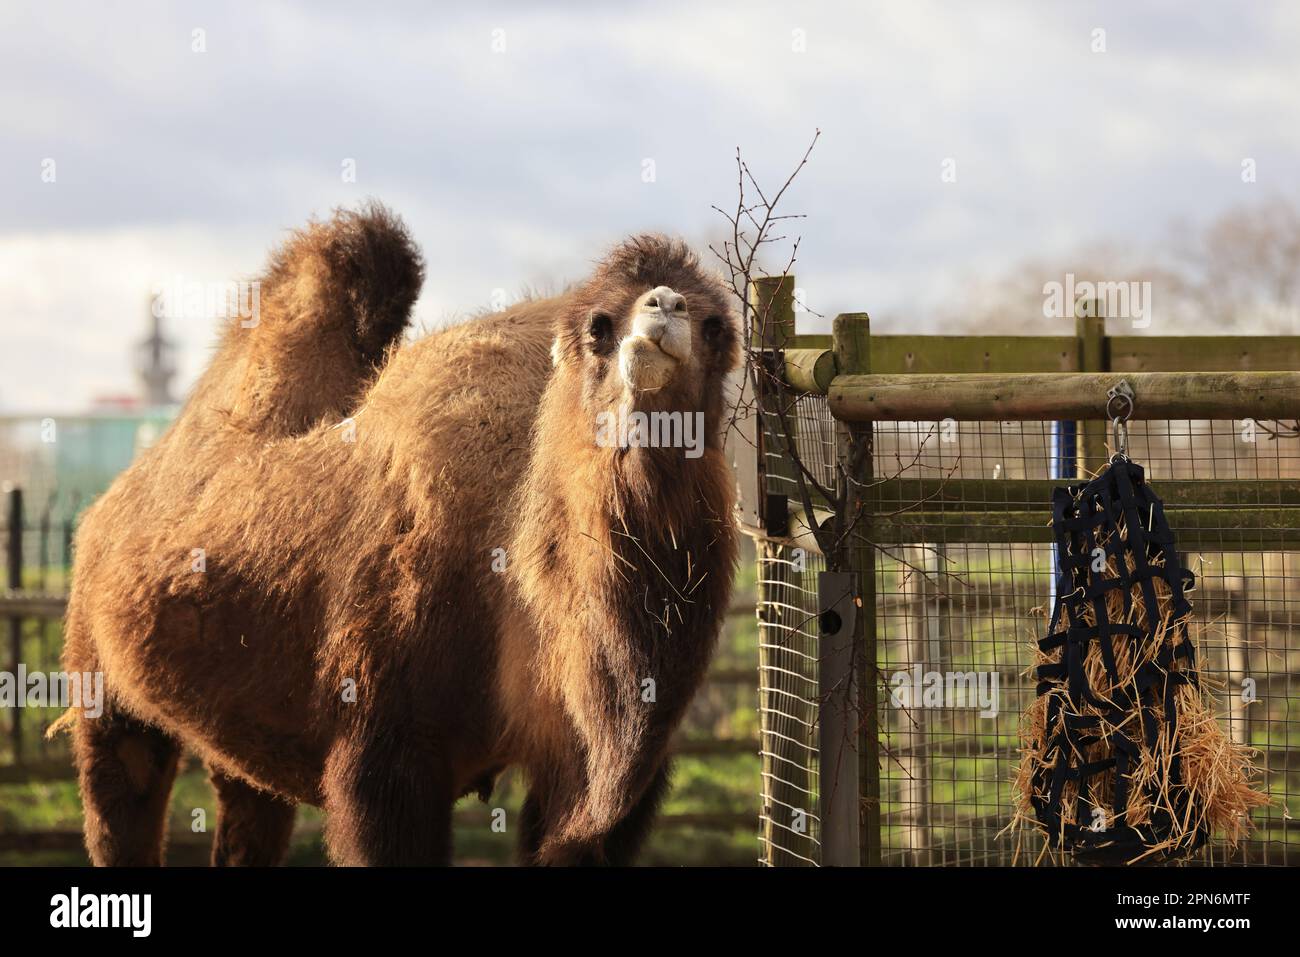 Bactrian camel (Camelus bactrianus) munching on hay at London Zoo, UK Stock Photo